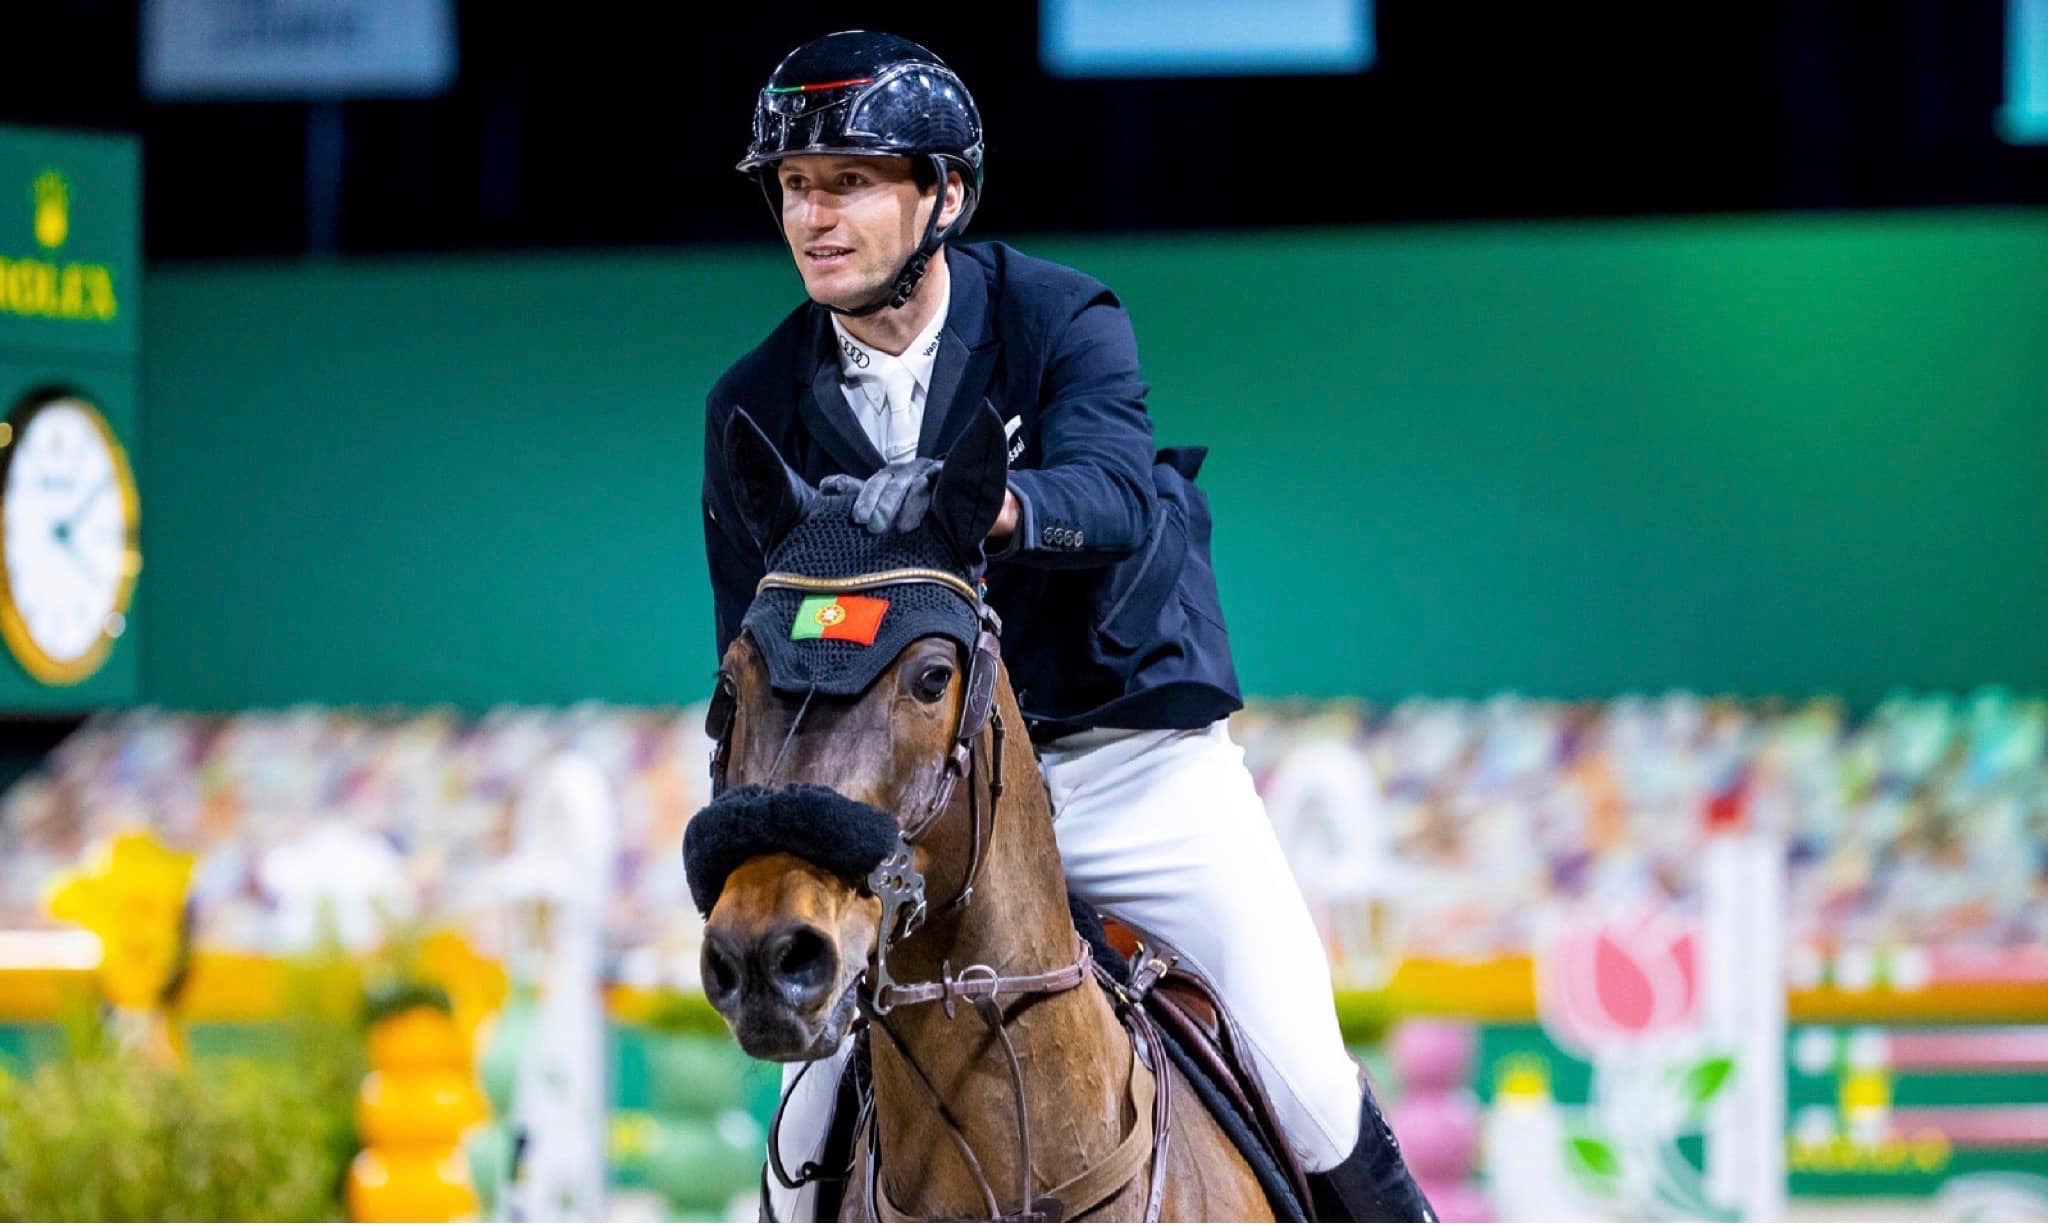 Rodrgio Giesteira Almeida and his top horse GB Celine part ways